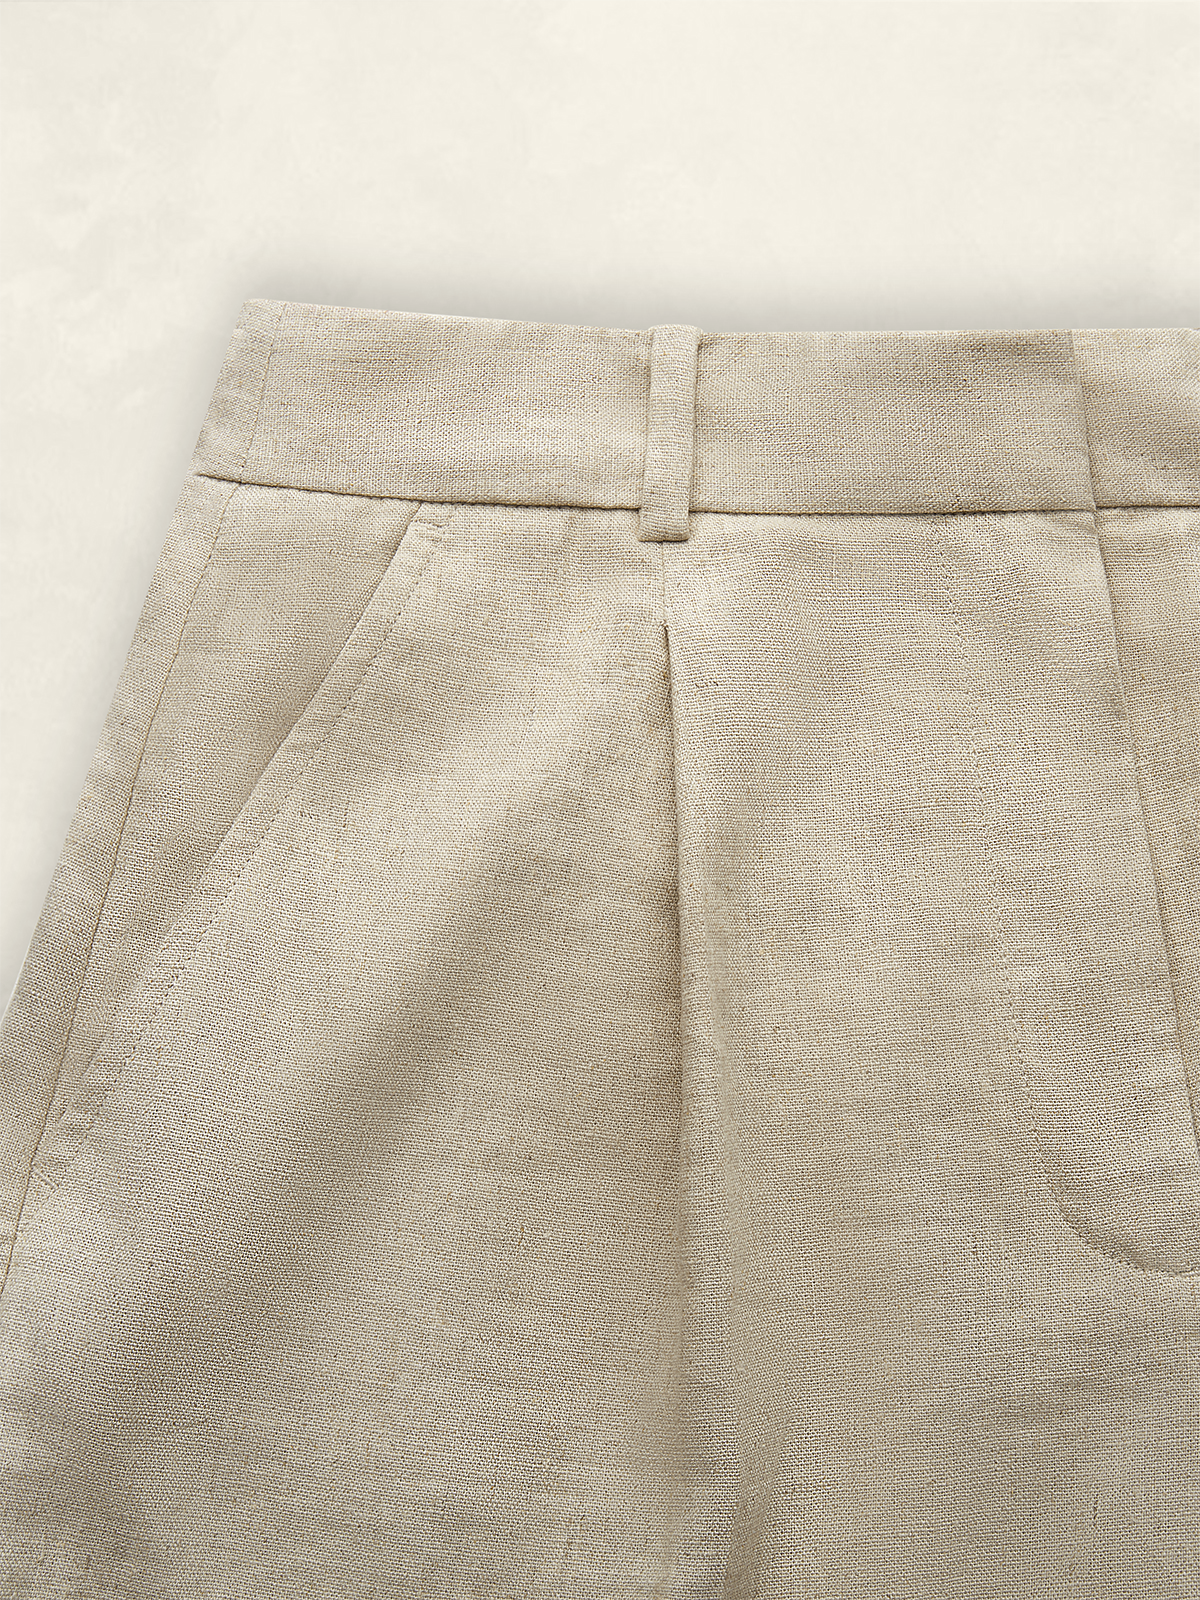 Casual Plain Natural Zipper Shorts